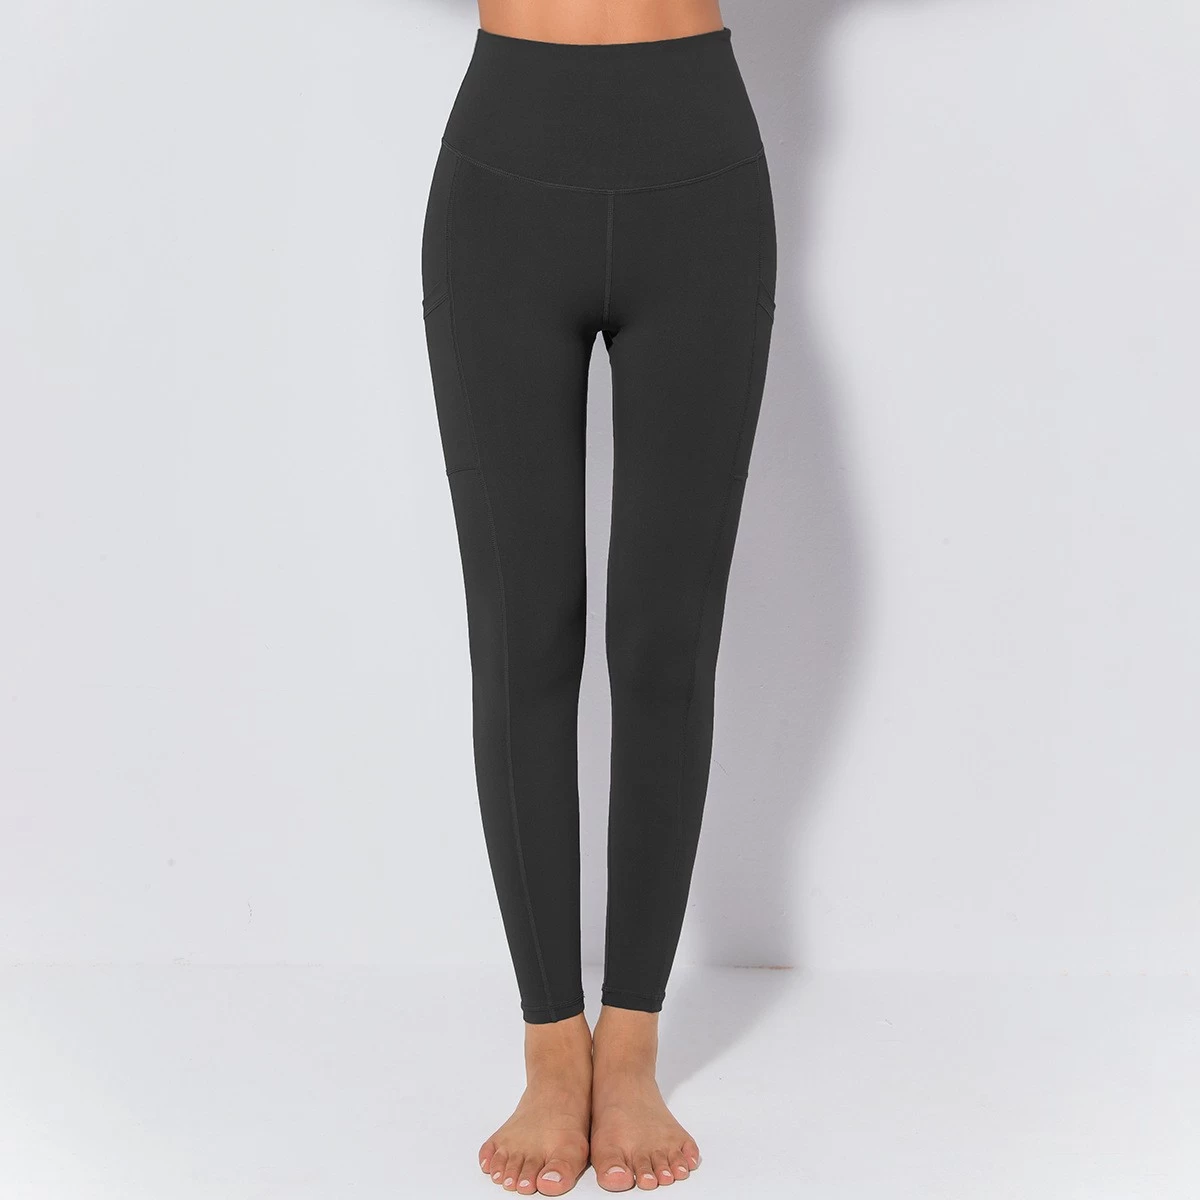 S-SHAPER desnudez Fitness Butt Lift Leggings para mujeres entrenamiento Yoga pantalones fruncidos botín cintura alta mallas sin costuras medias de compresión